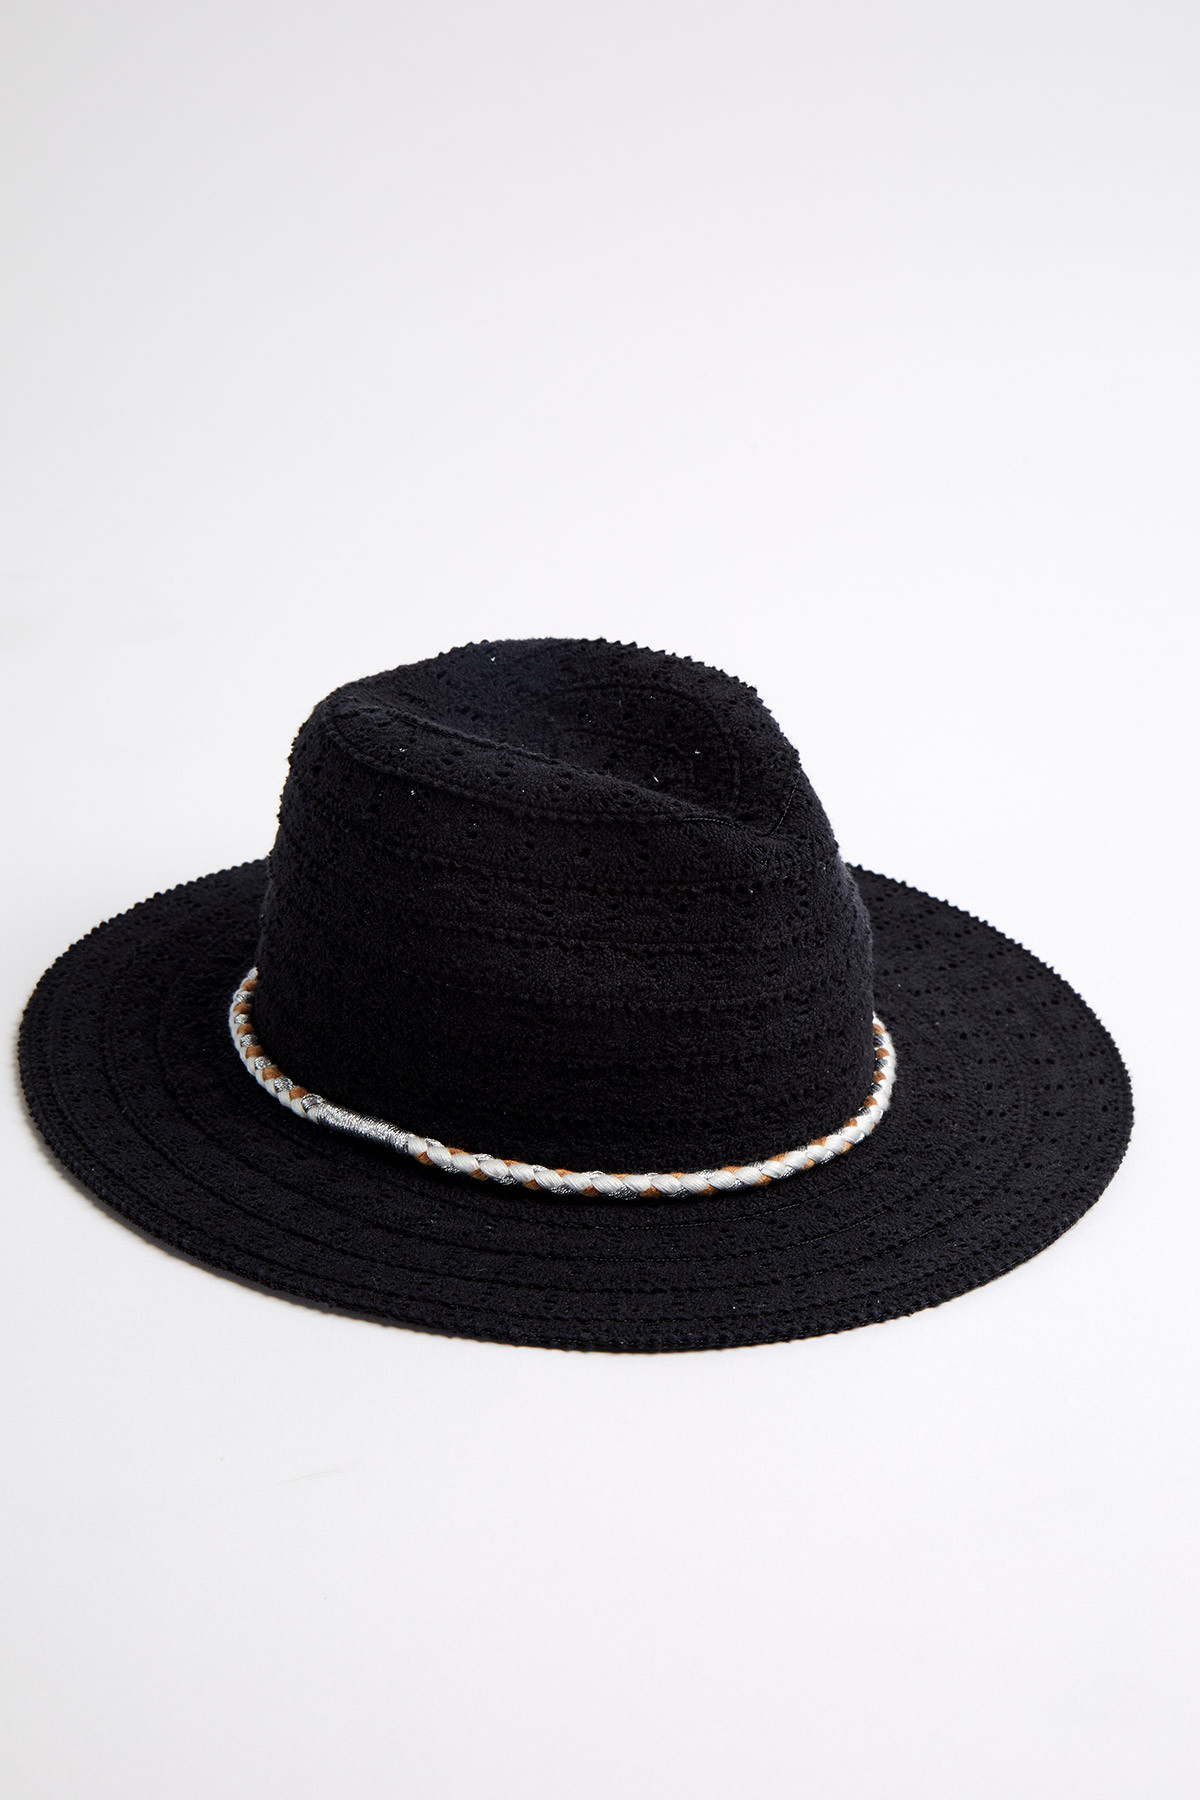 vaak Ontspannend hoek Avila Hatsy zwarte hoed | Banana Moon®